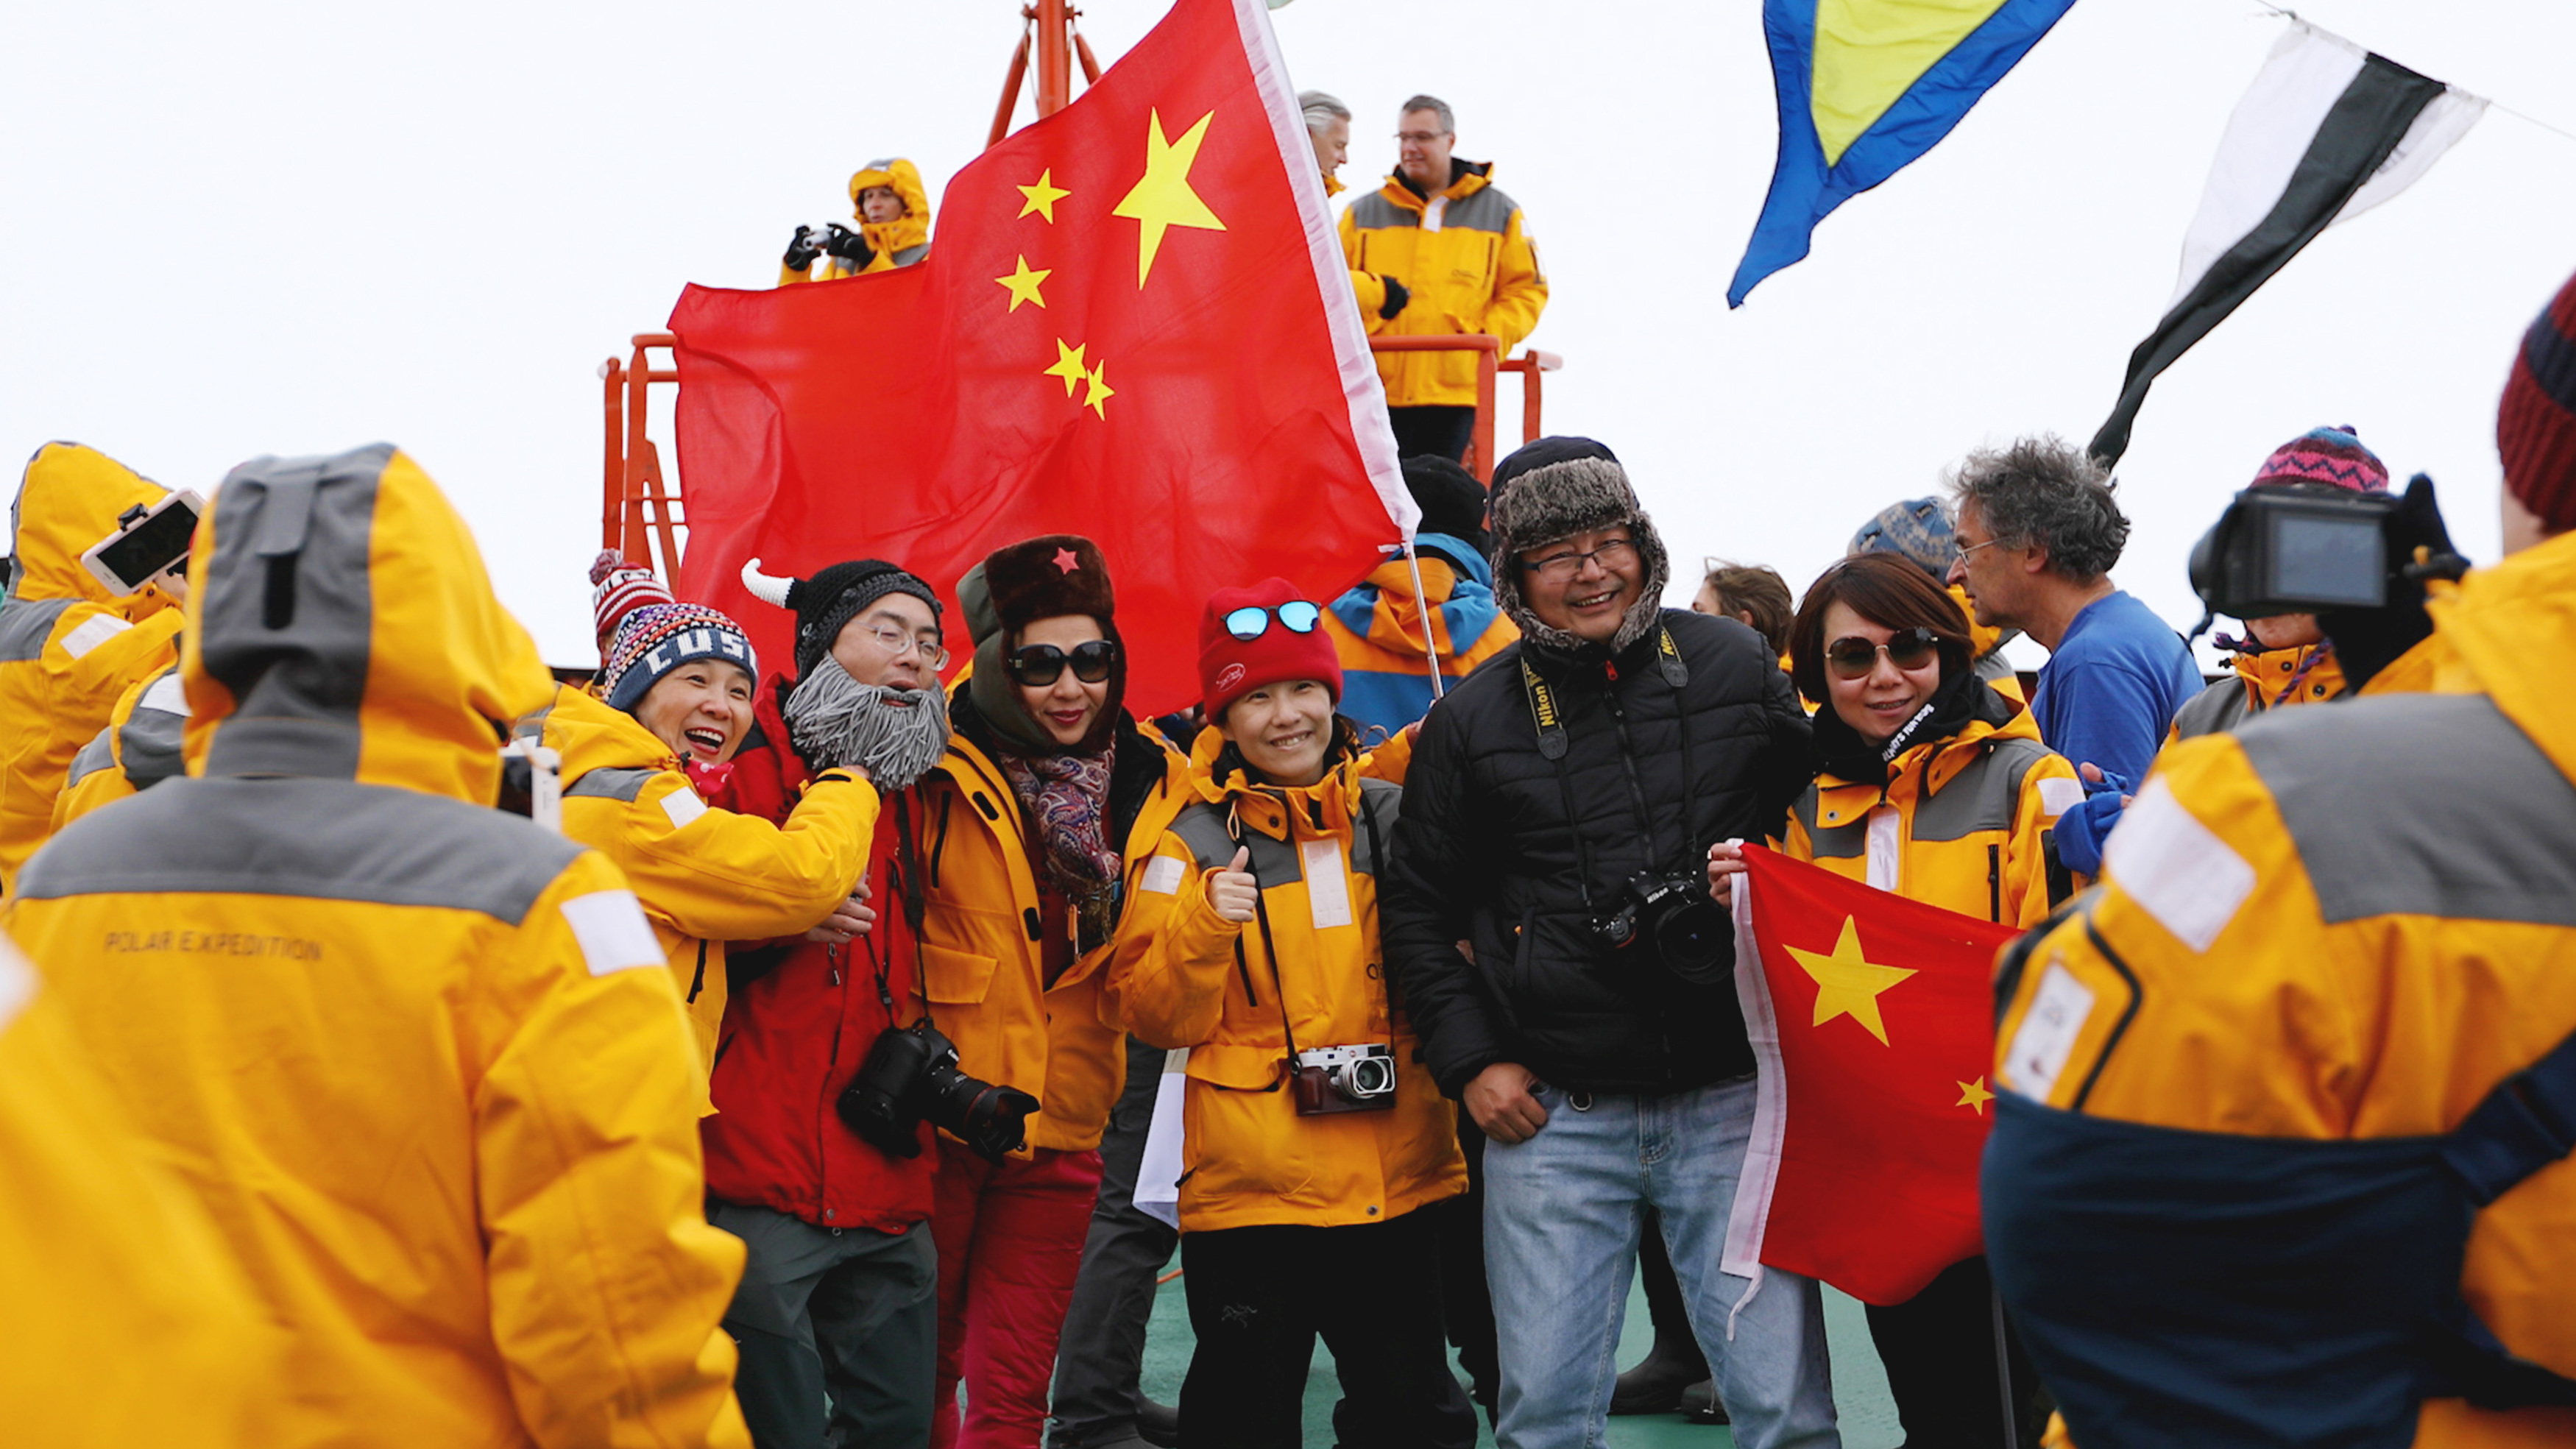 A group of Chinese passengers celebrate reaching the North Pole. Photo: Dani Plumb